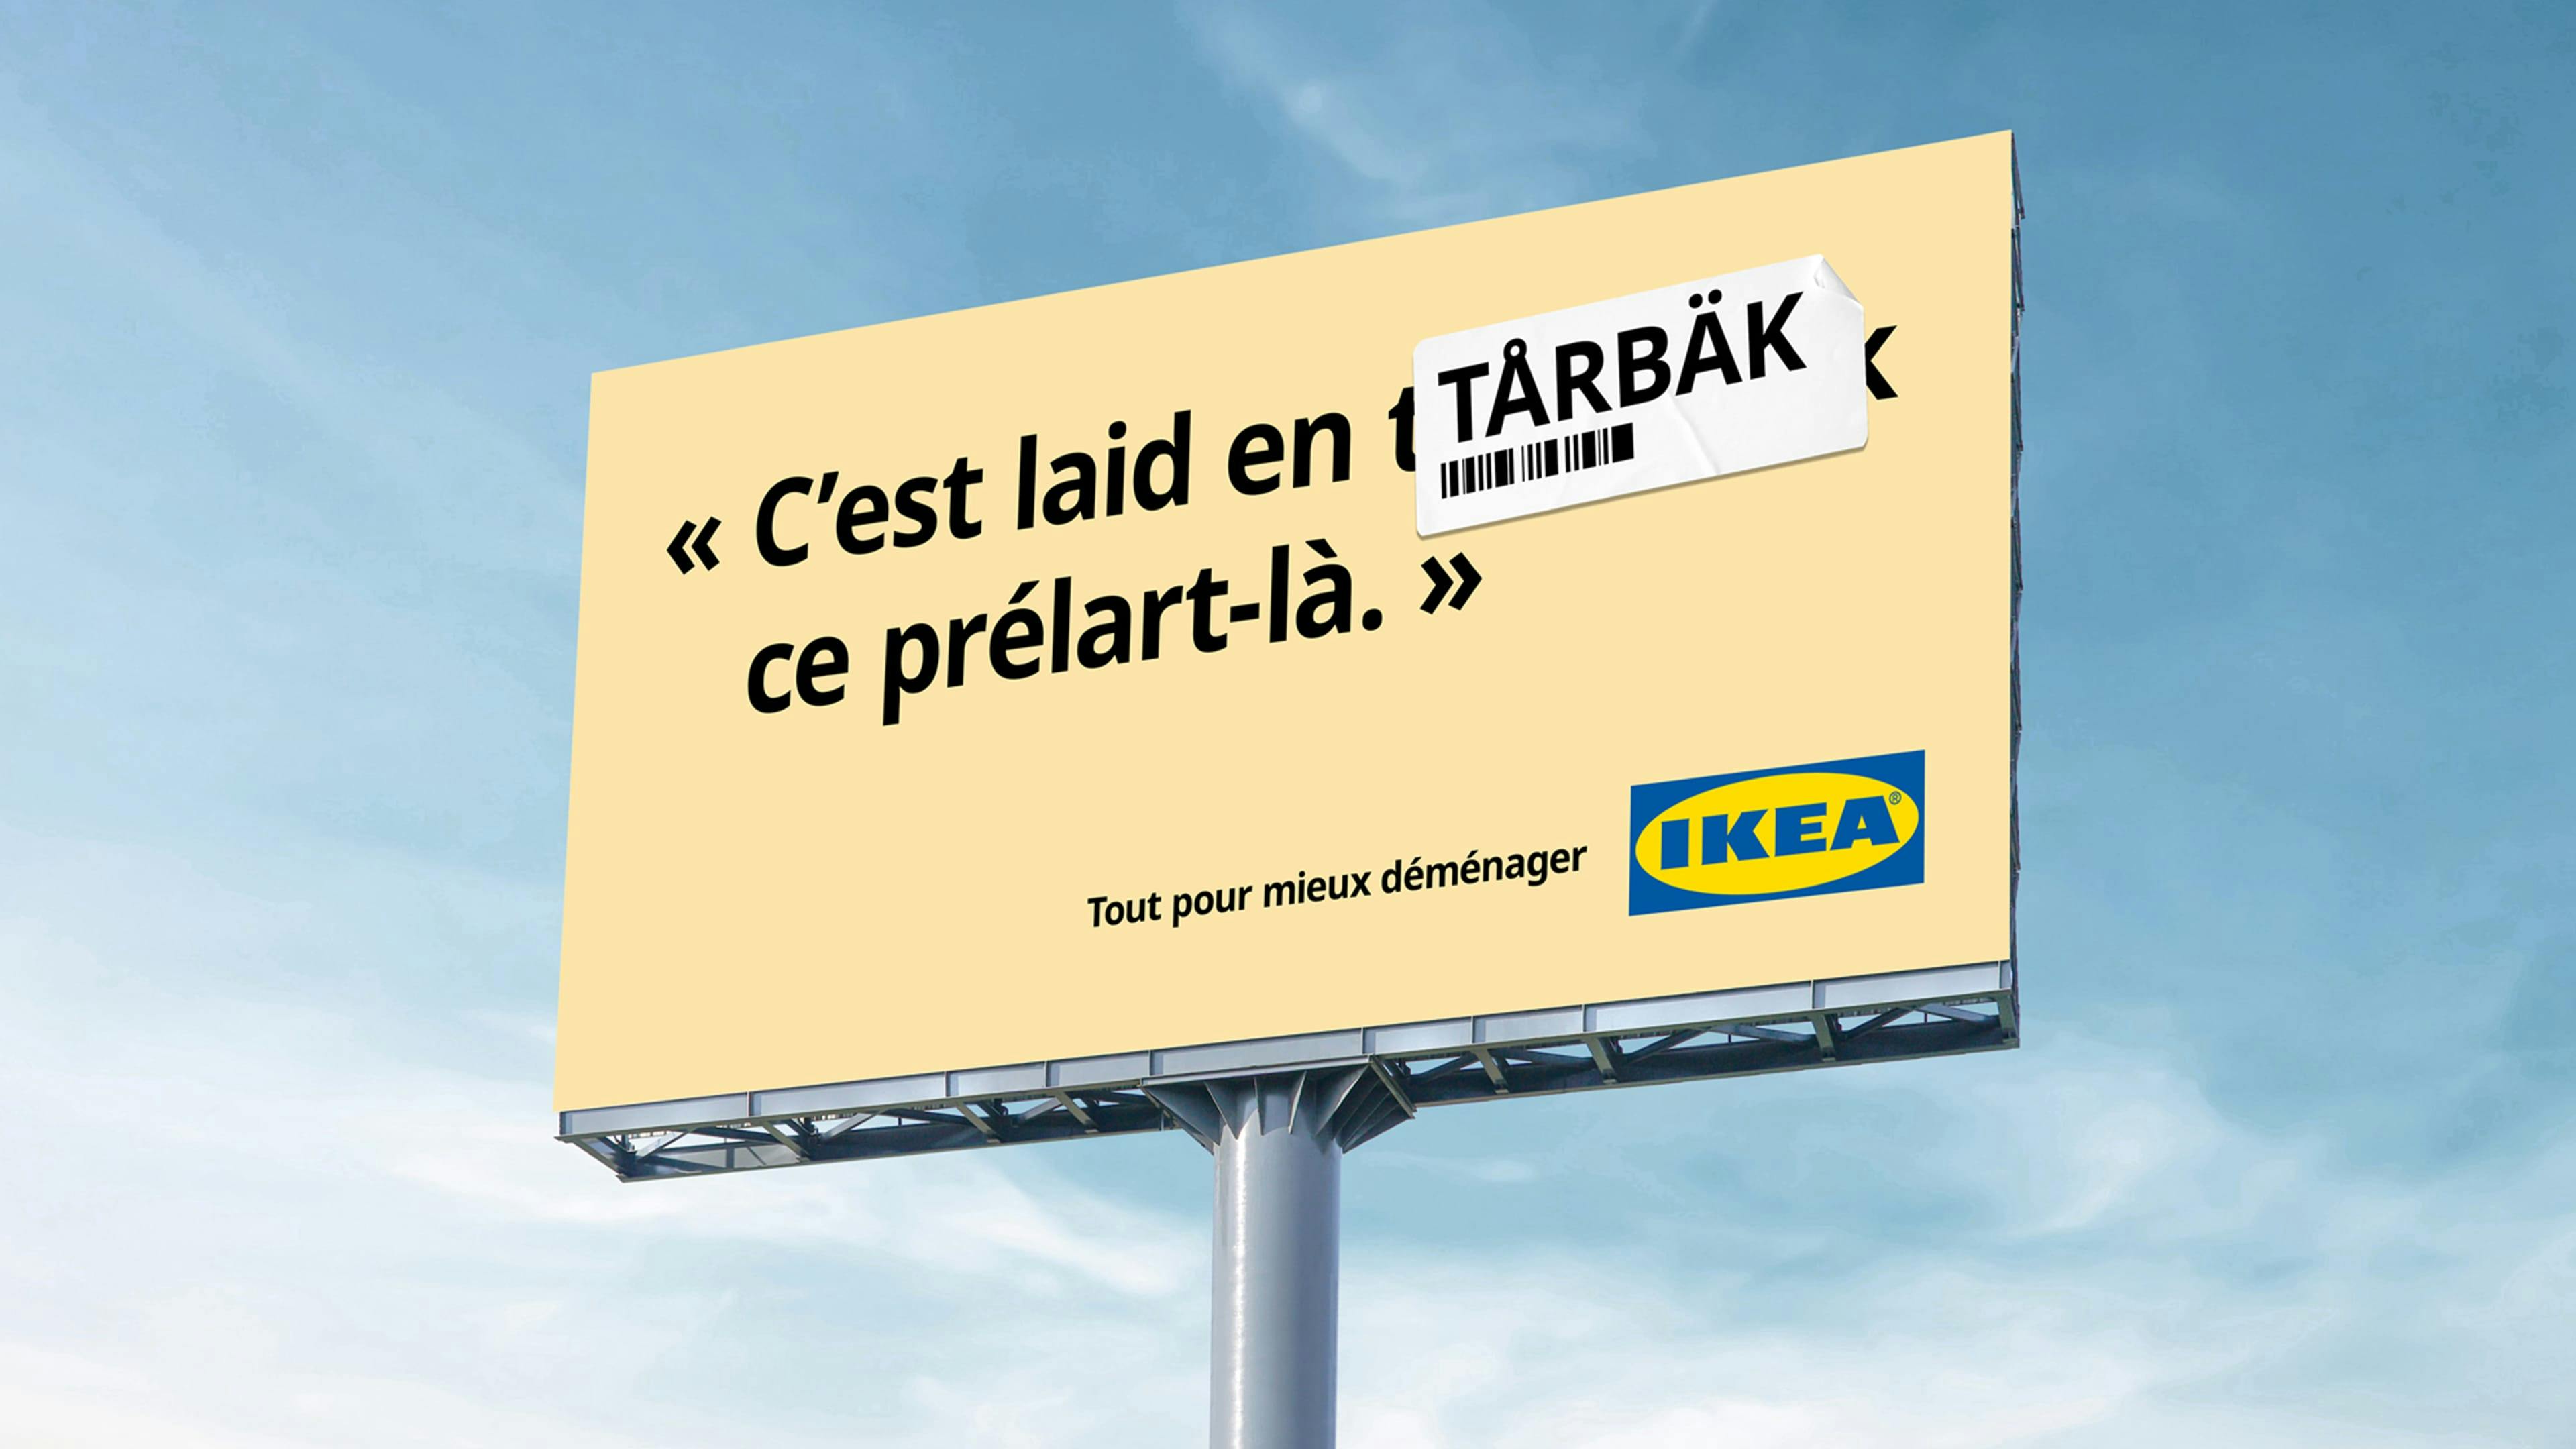 IKEA billboard - Tarbak